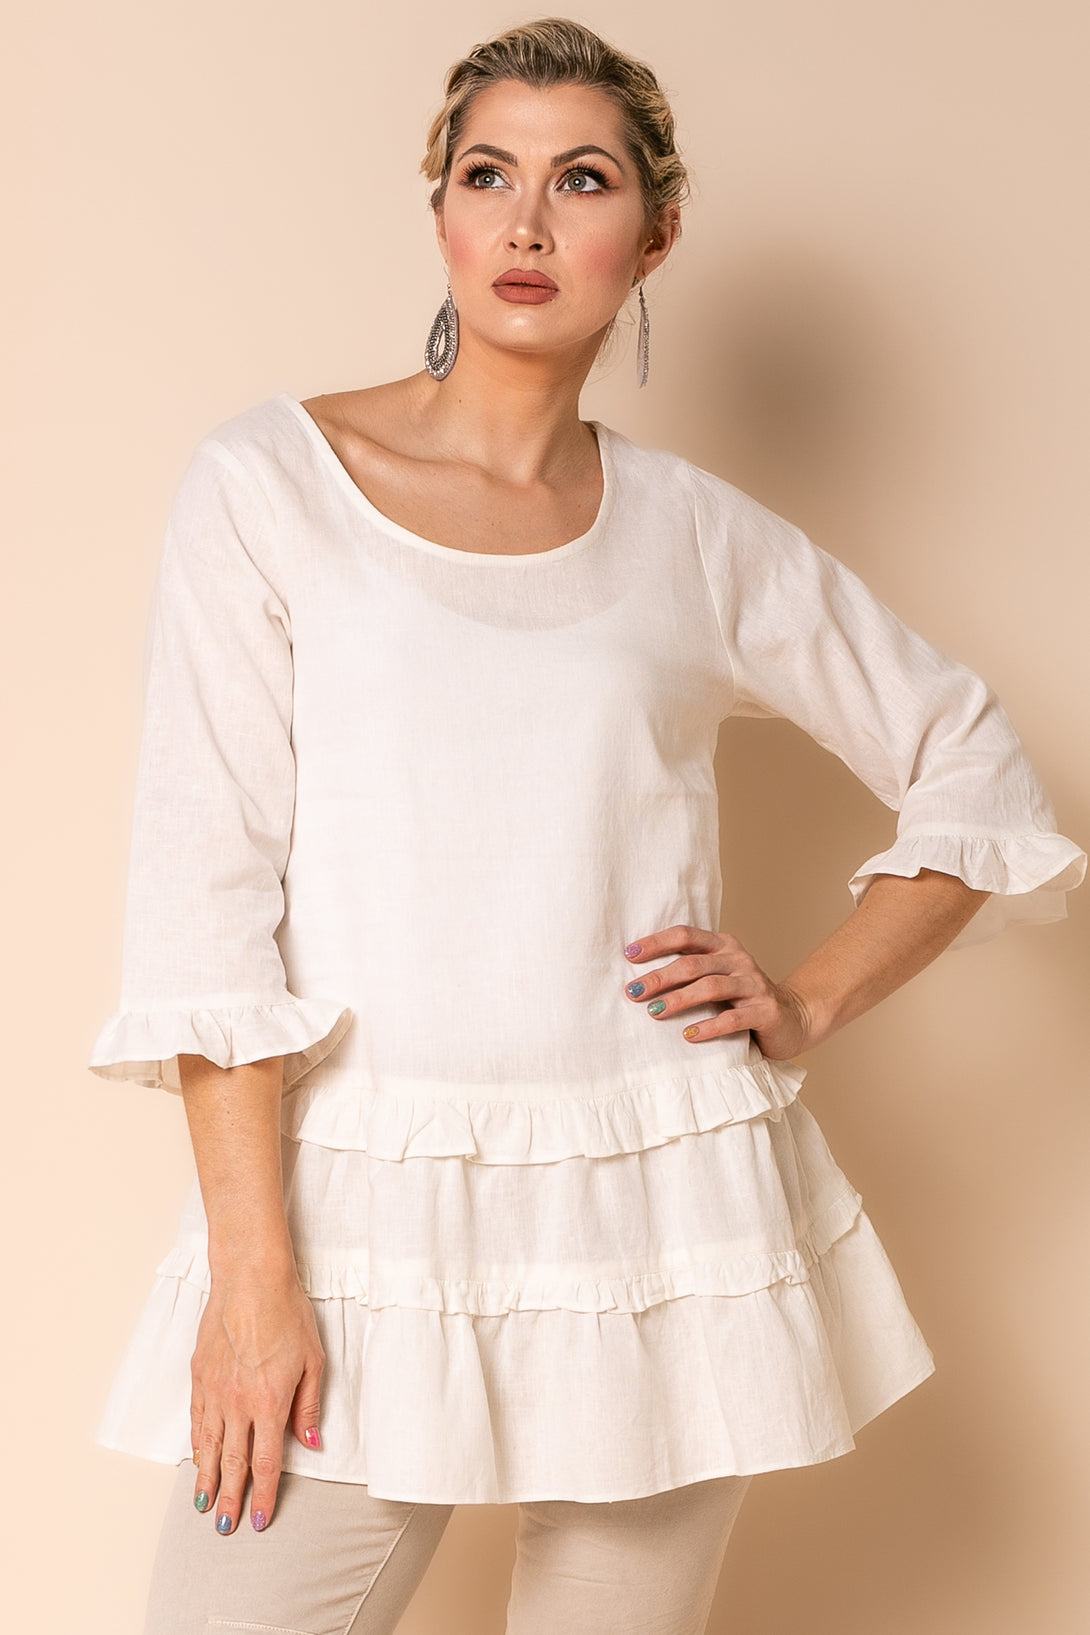 Mavis Linen Blend Top in Cream - Imagine Fashion